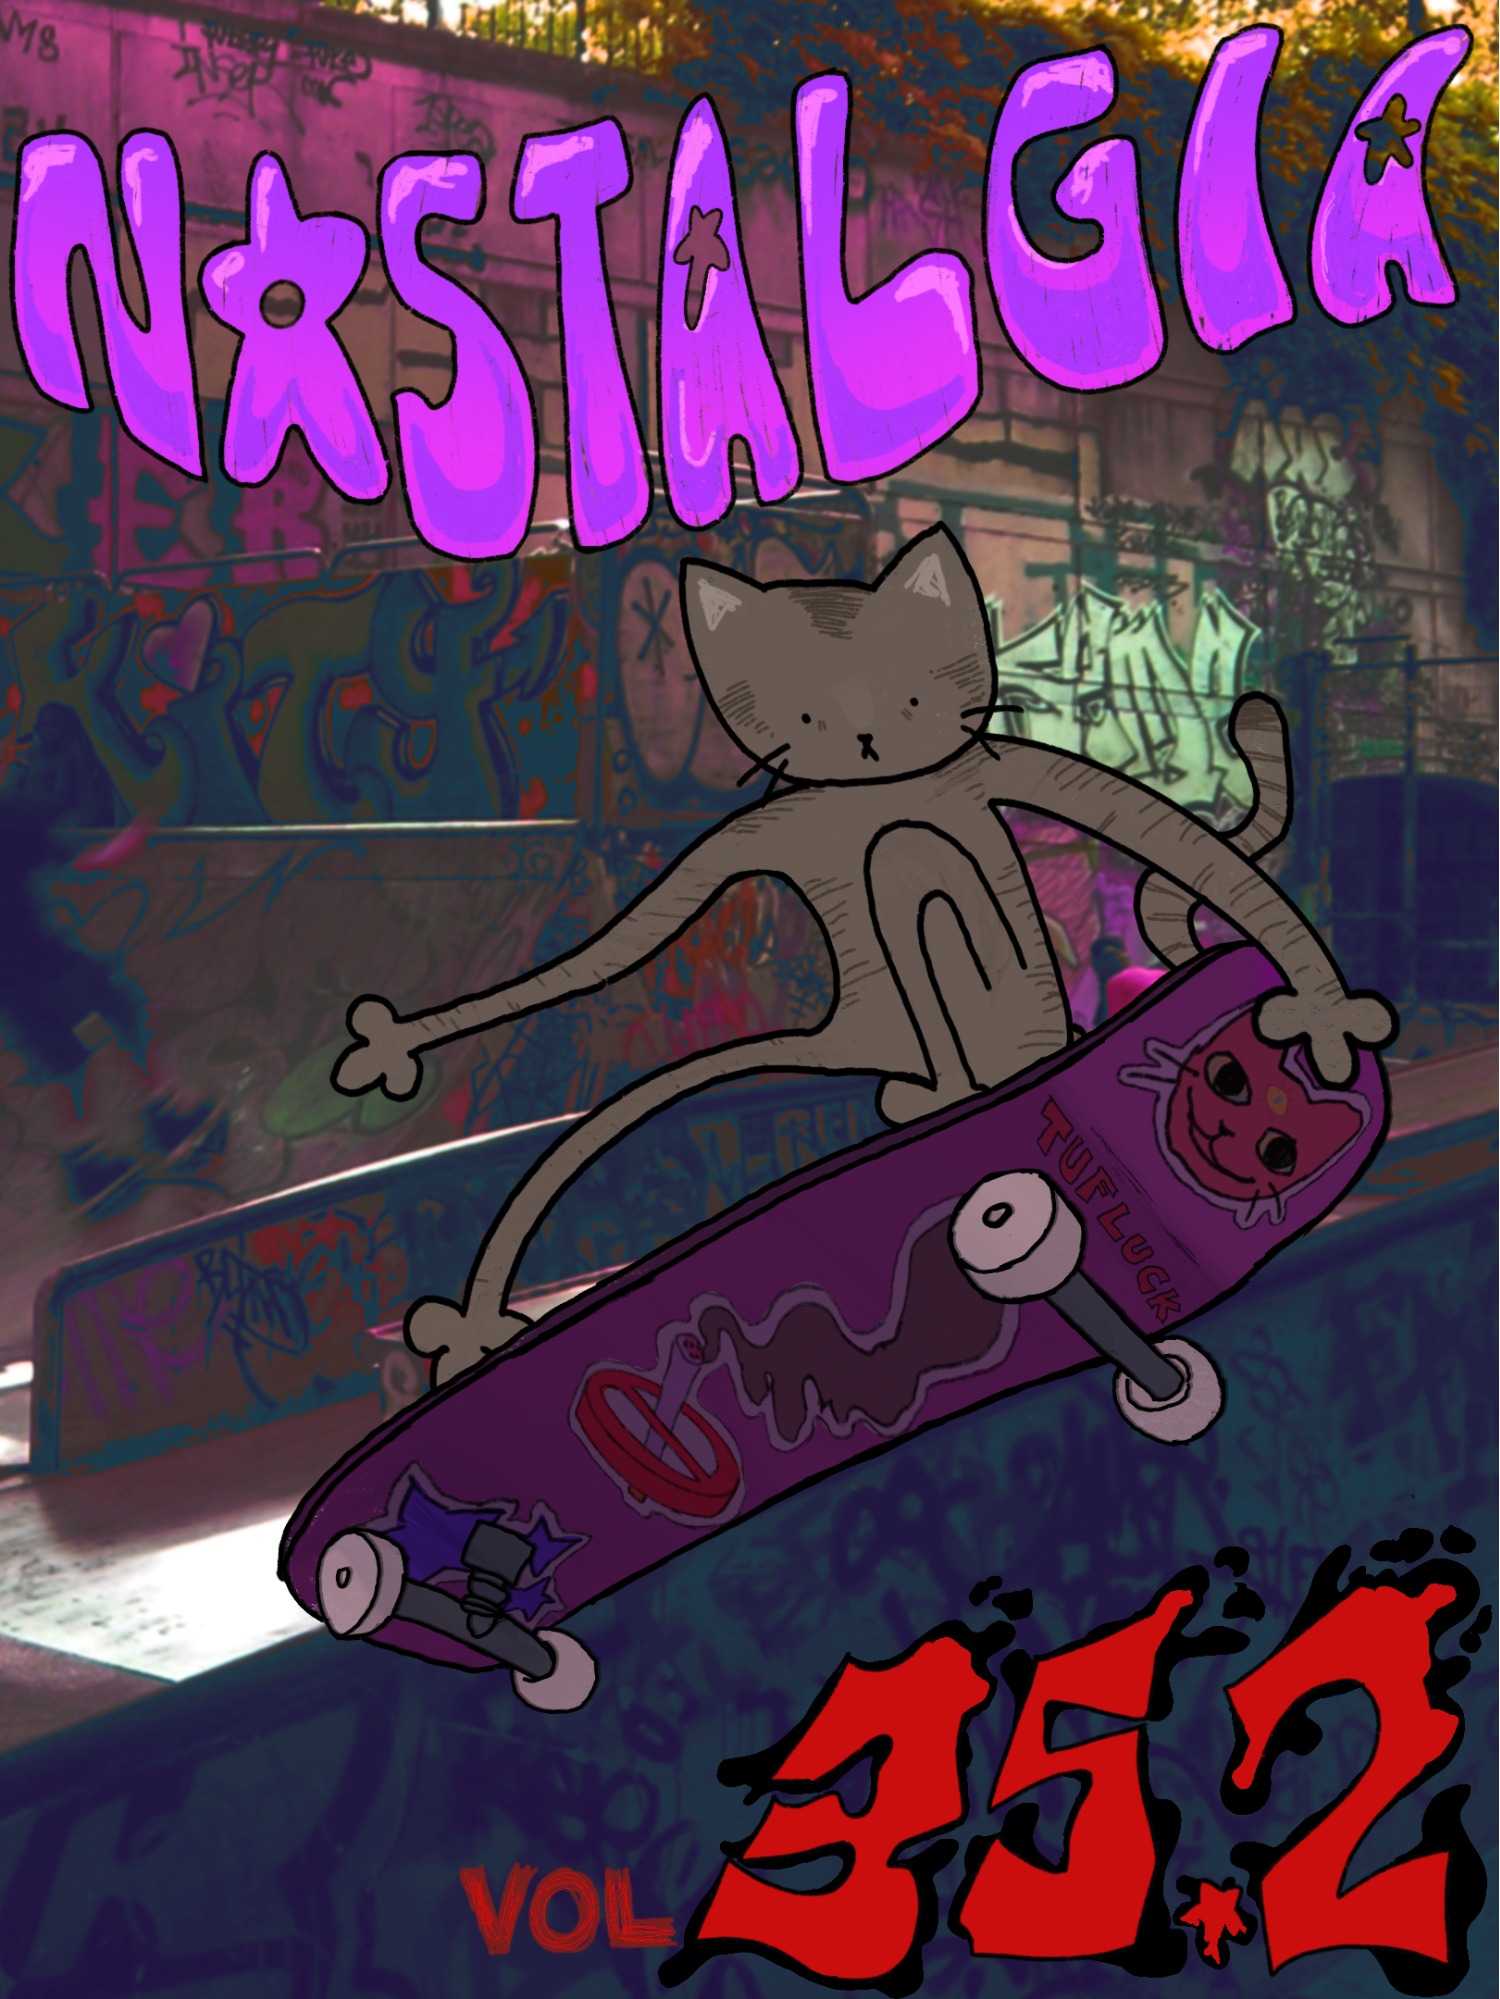 Cat on a skateboard (very rad)